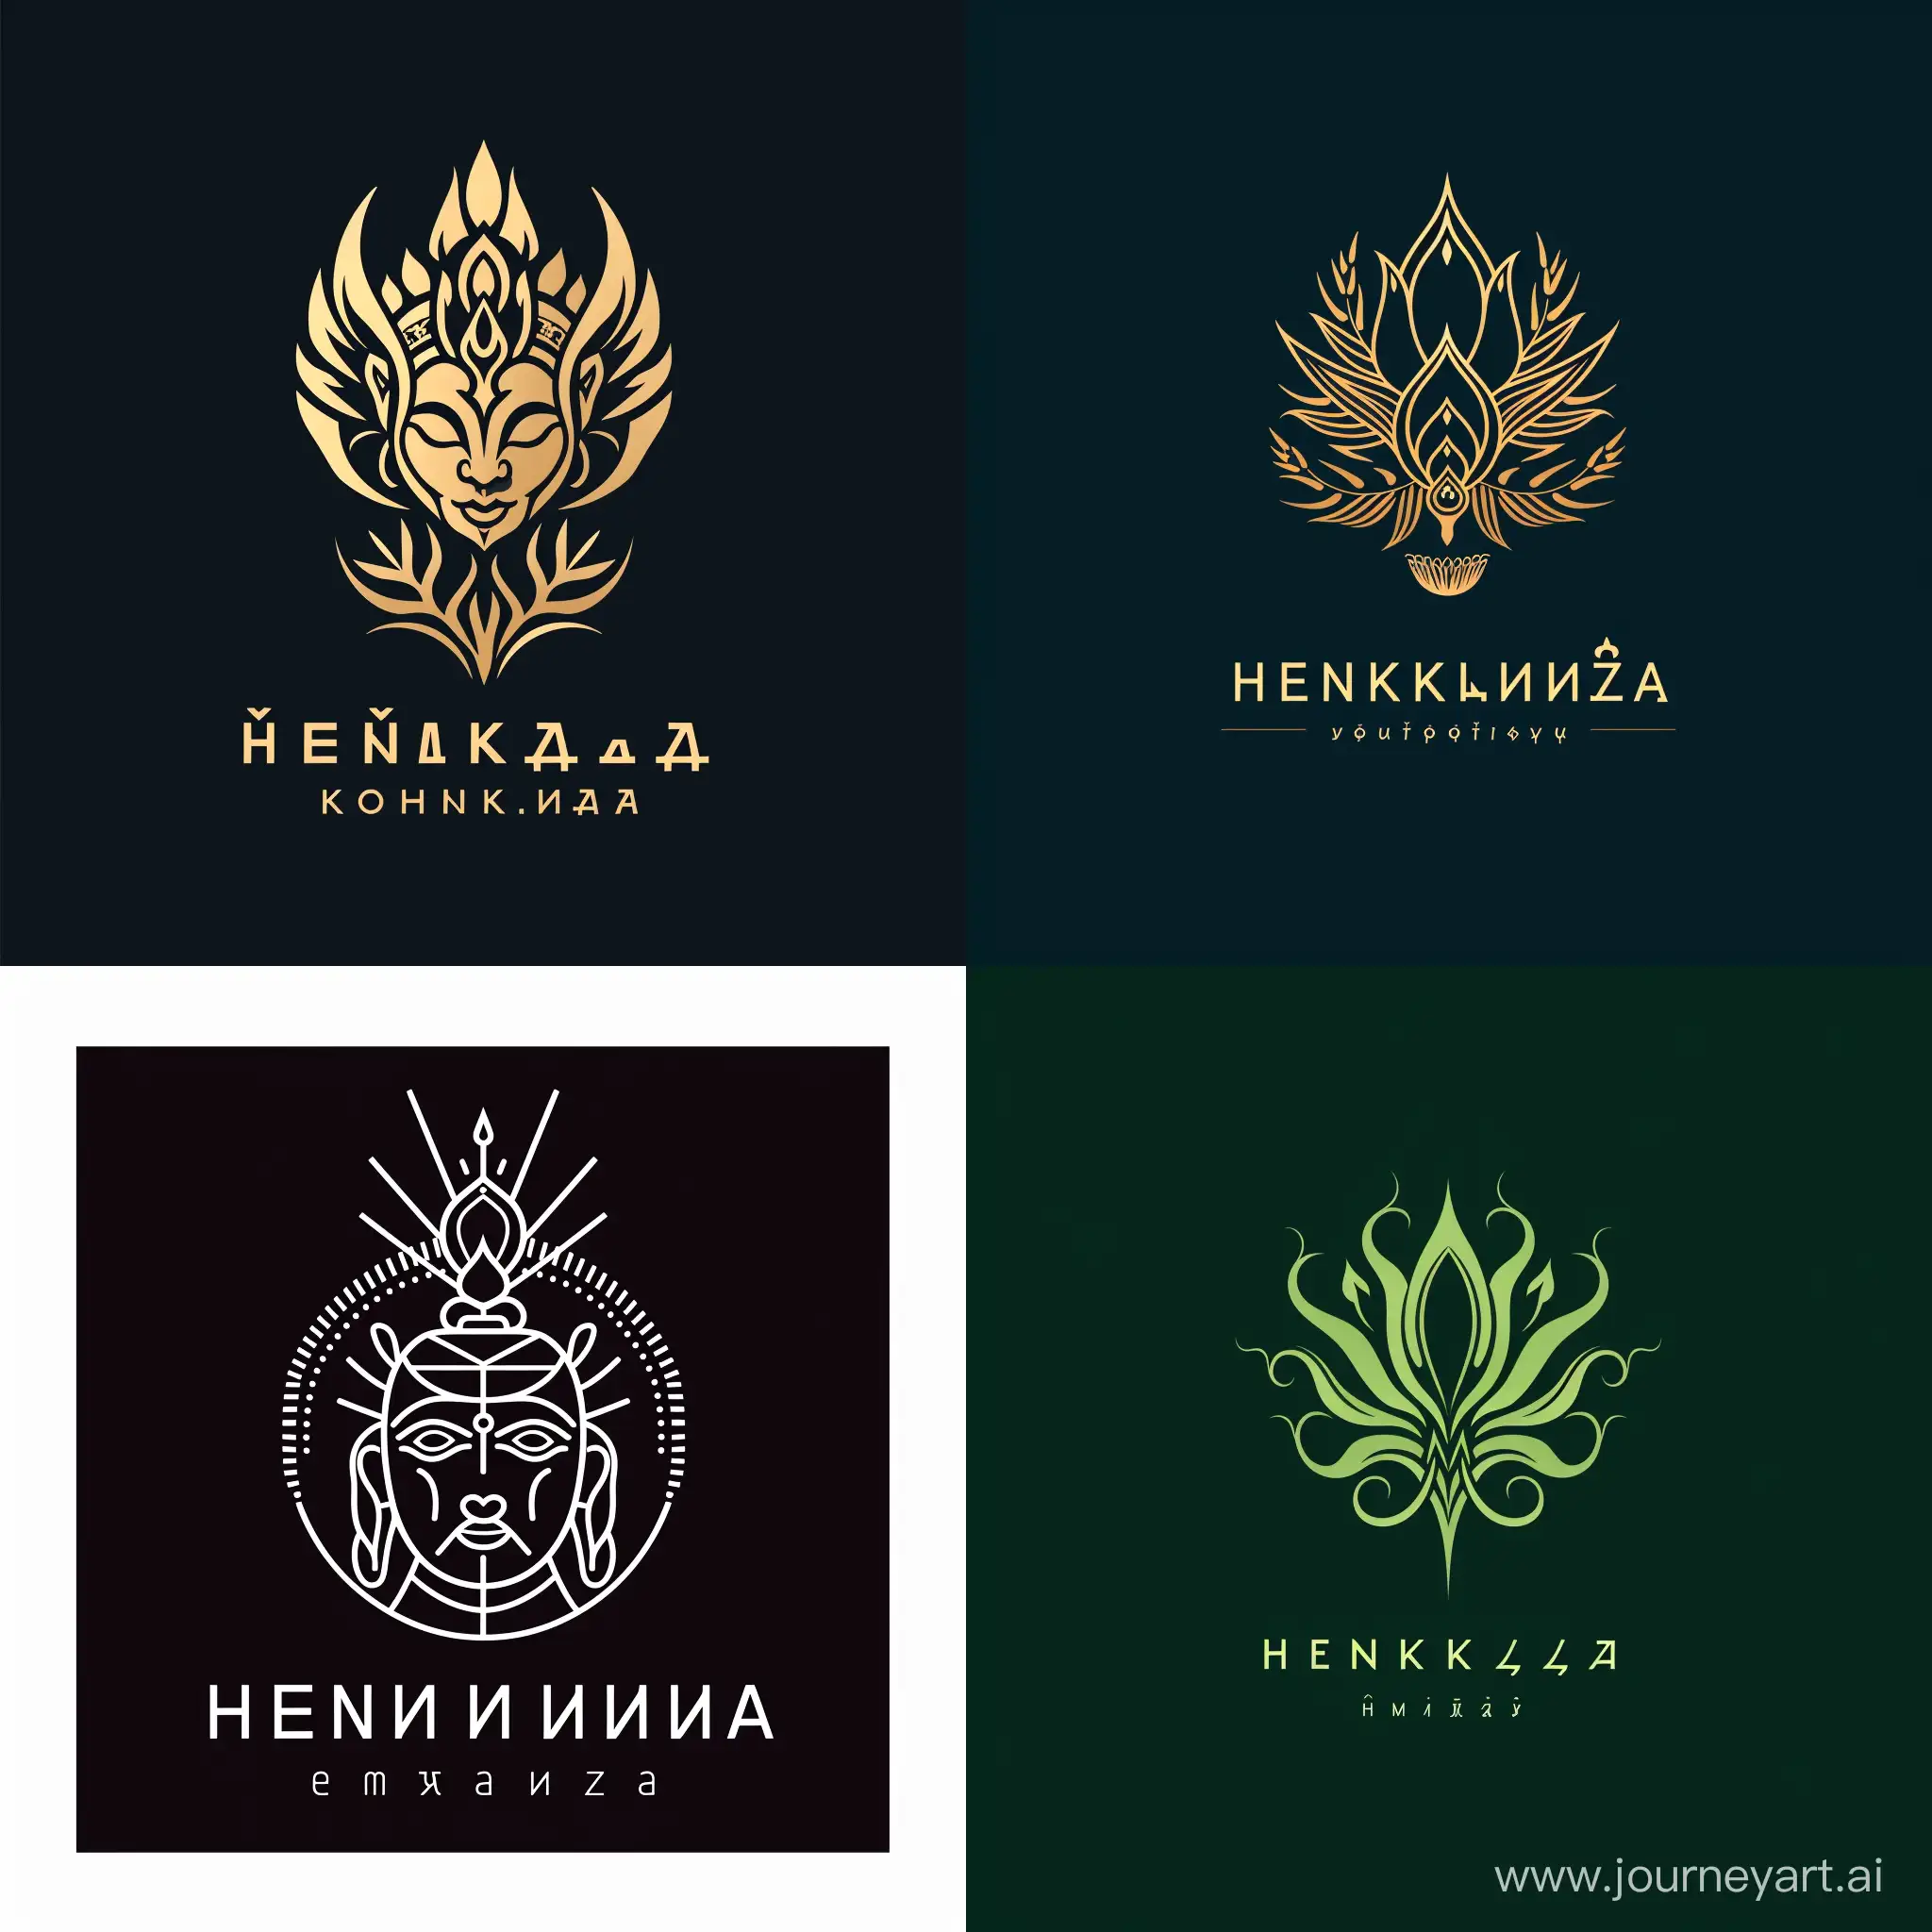 Authentic-Khinkali-Logo-Design-Henkalnaya-Perfection-in-a-11-Aspect-Ratio-90159